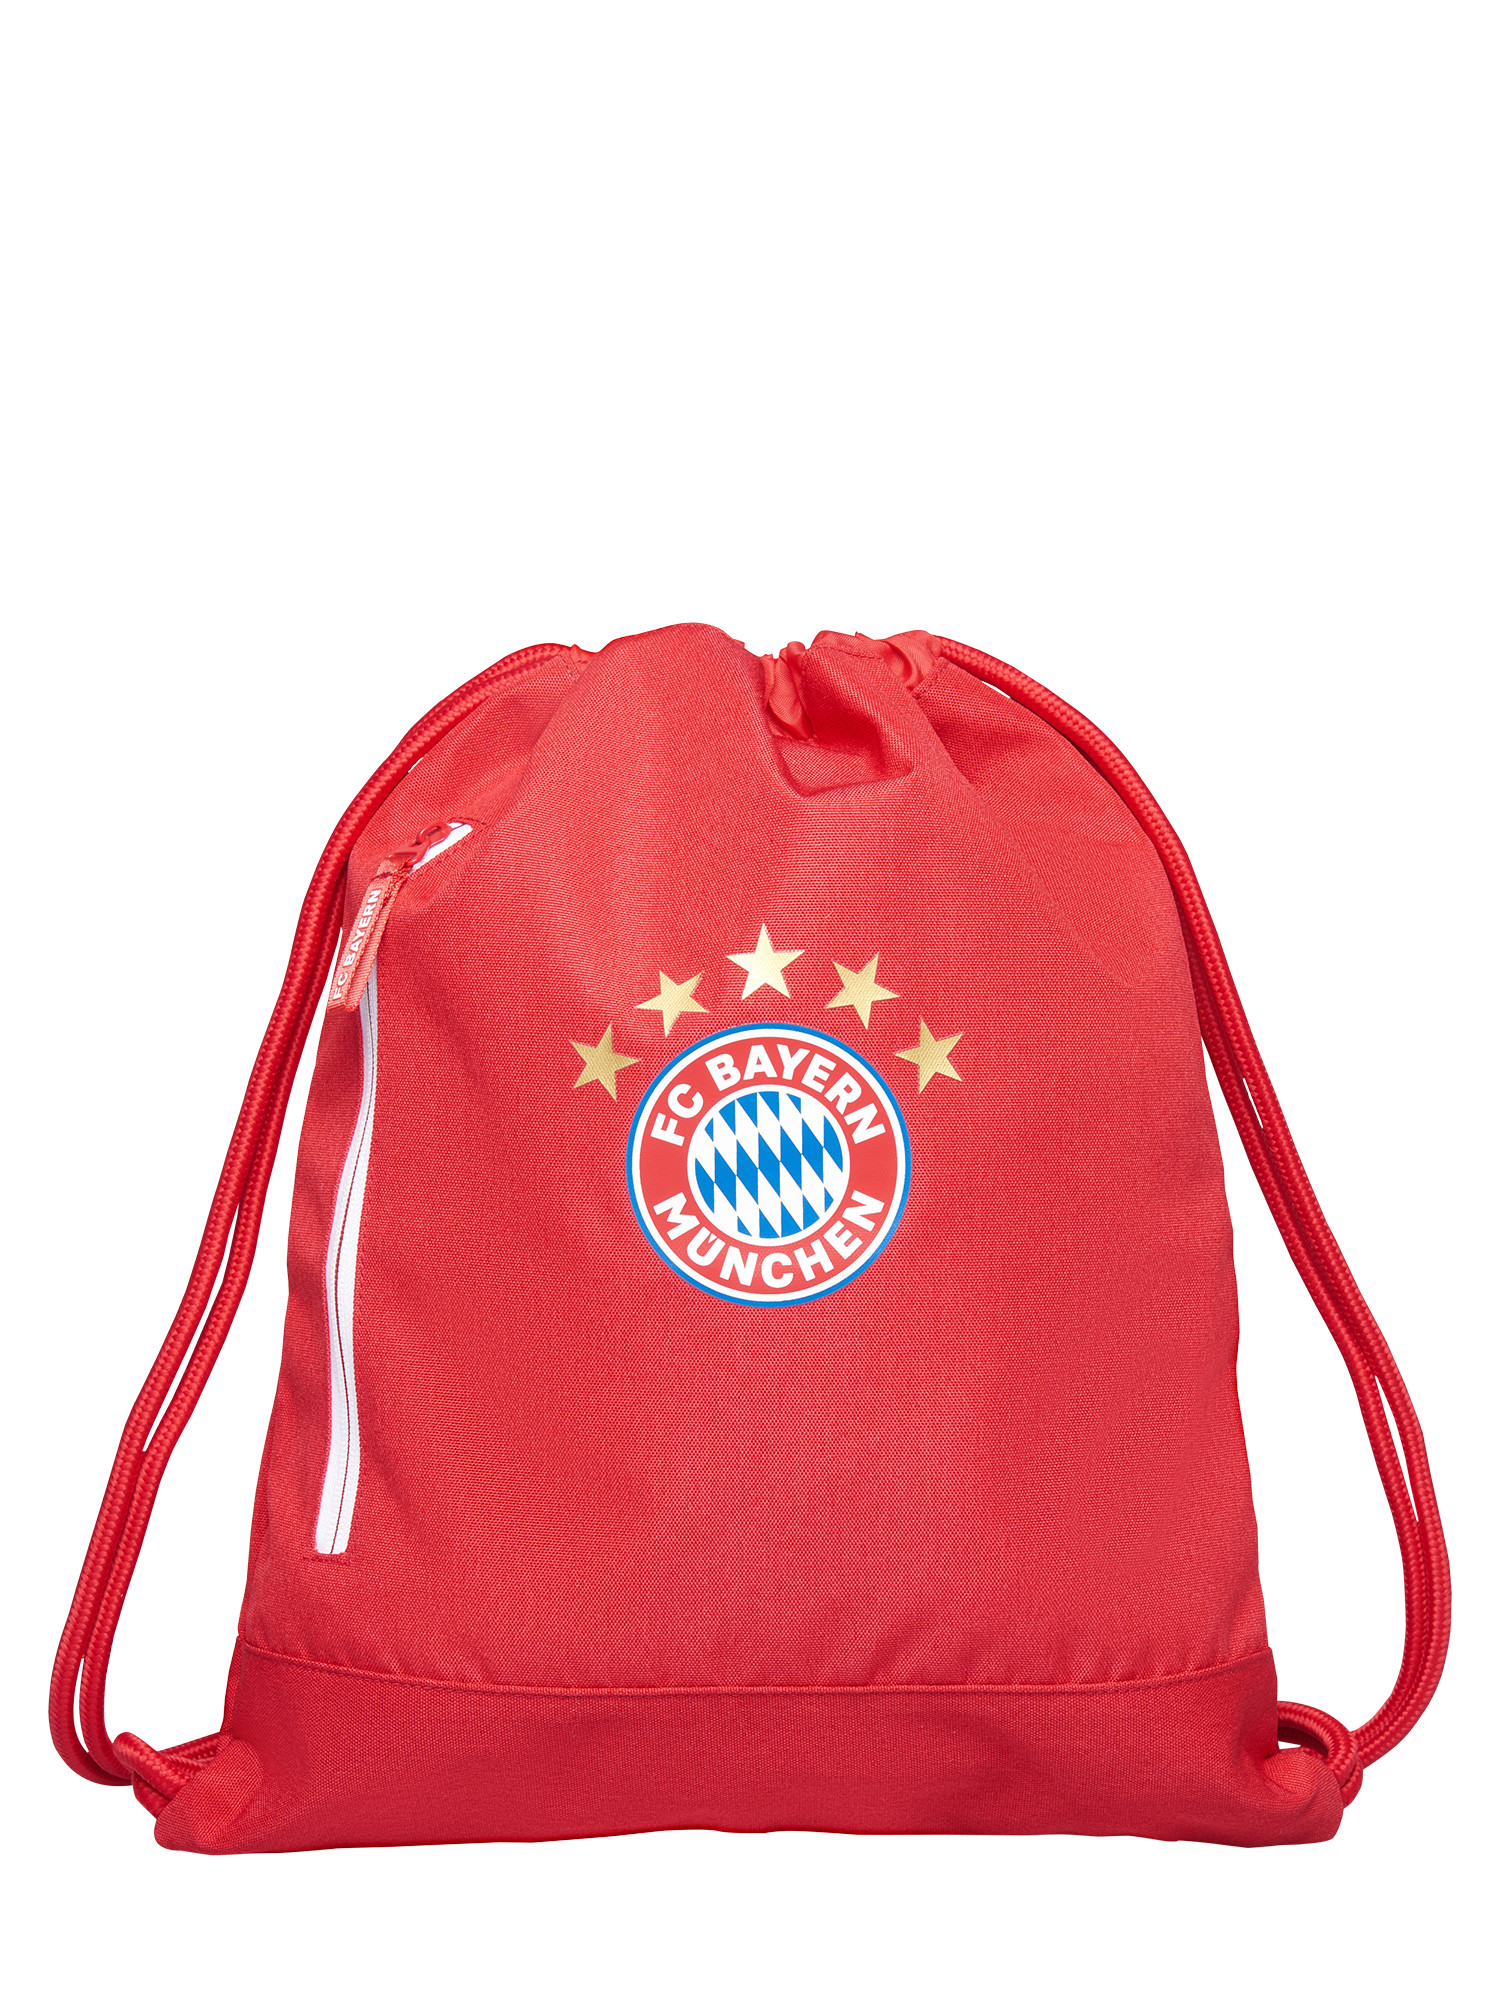 FC Bayern München - Bayern Mníchov taška na chrbát / vrecko na prezúvky -SKLADOM